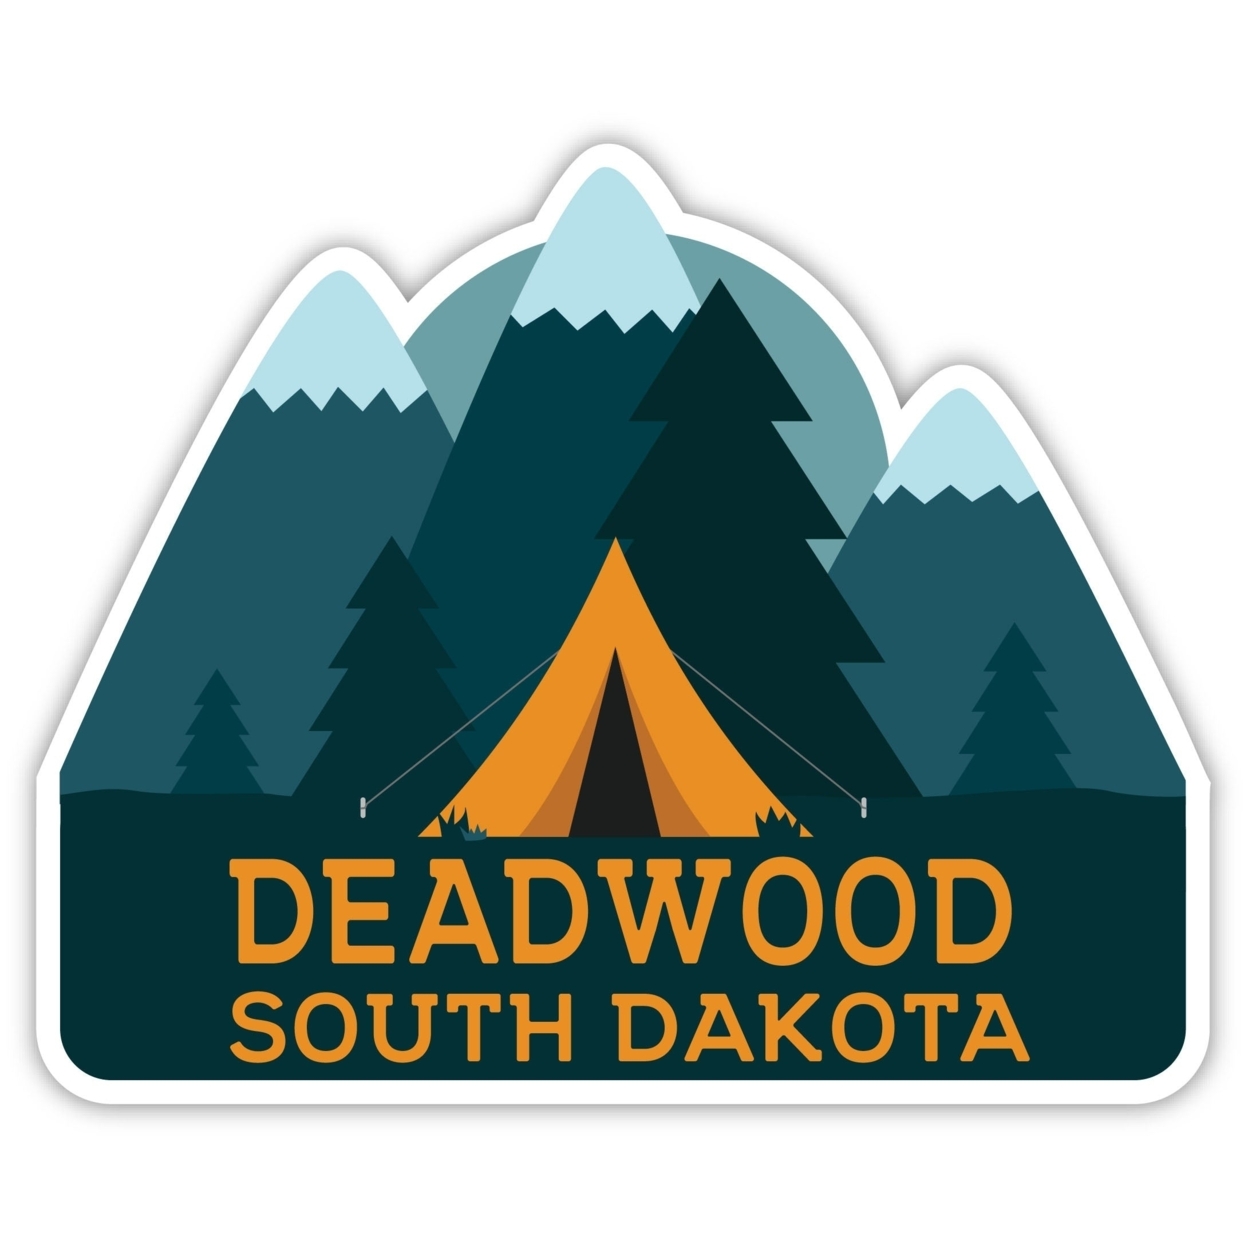 Deadwood South Dakota Souvenir Decorative Stickers (Choose Theme And Size) - 4-Pack, 2-Inch, Adventures Awaits